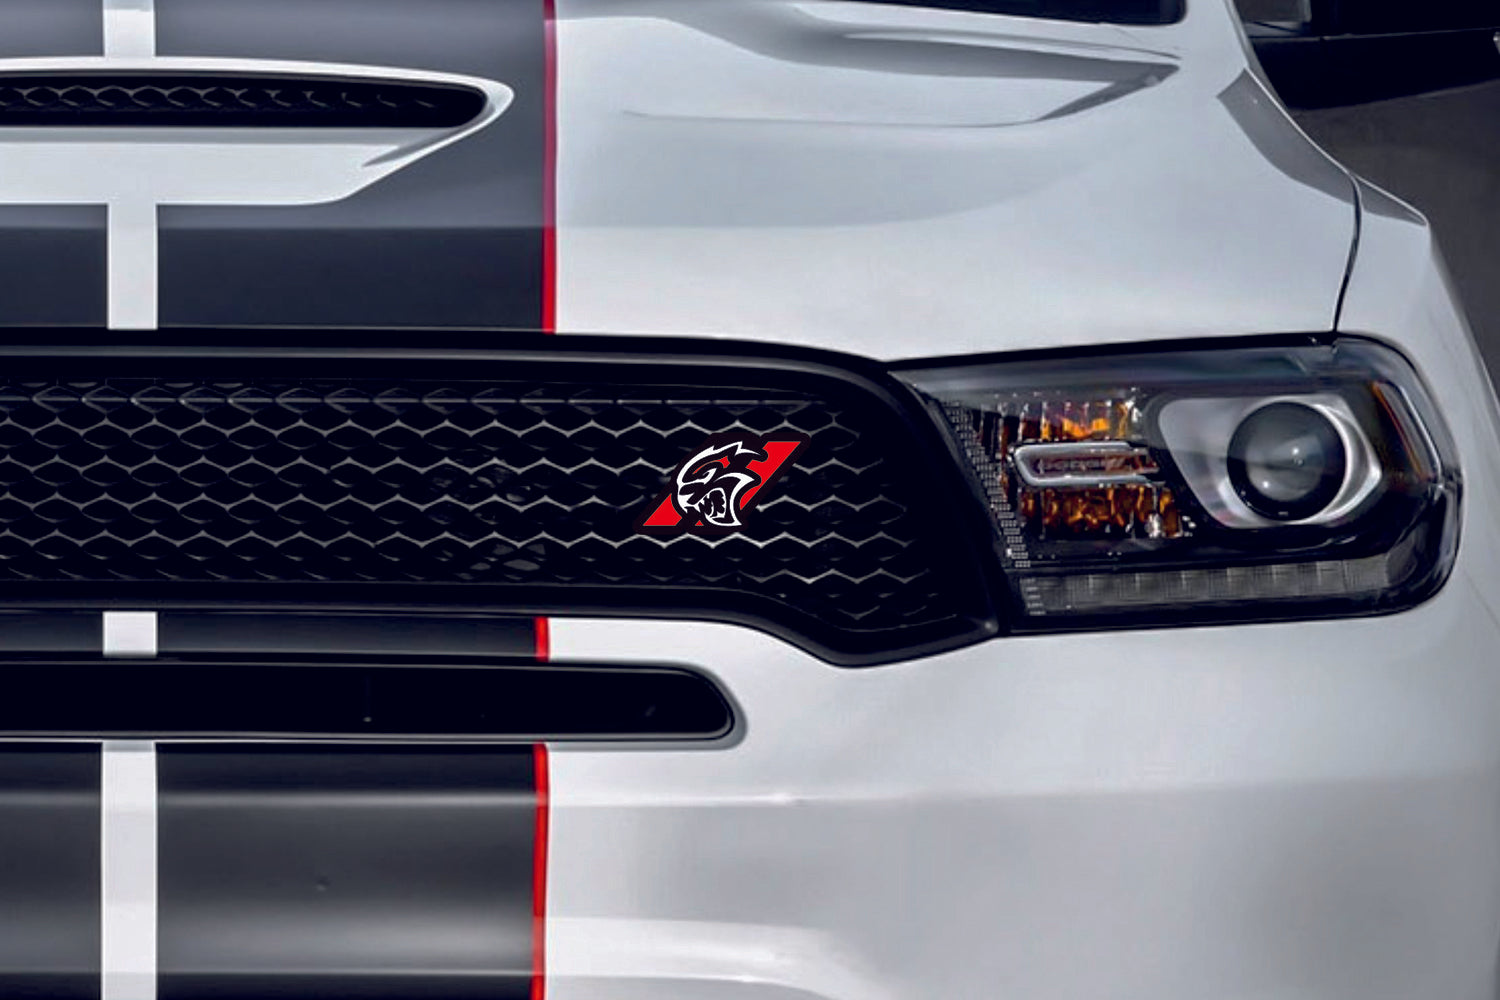 DODGE Radiator grille emblem with logo Hellcat + Dodge logo - decoinfabric